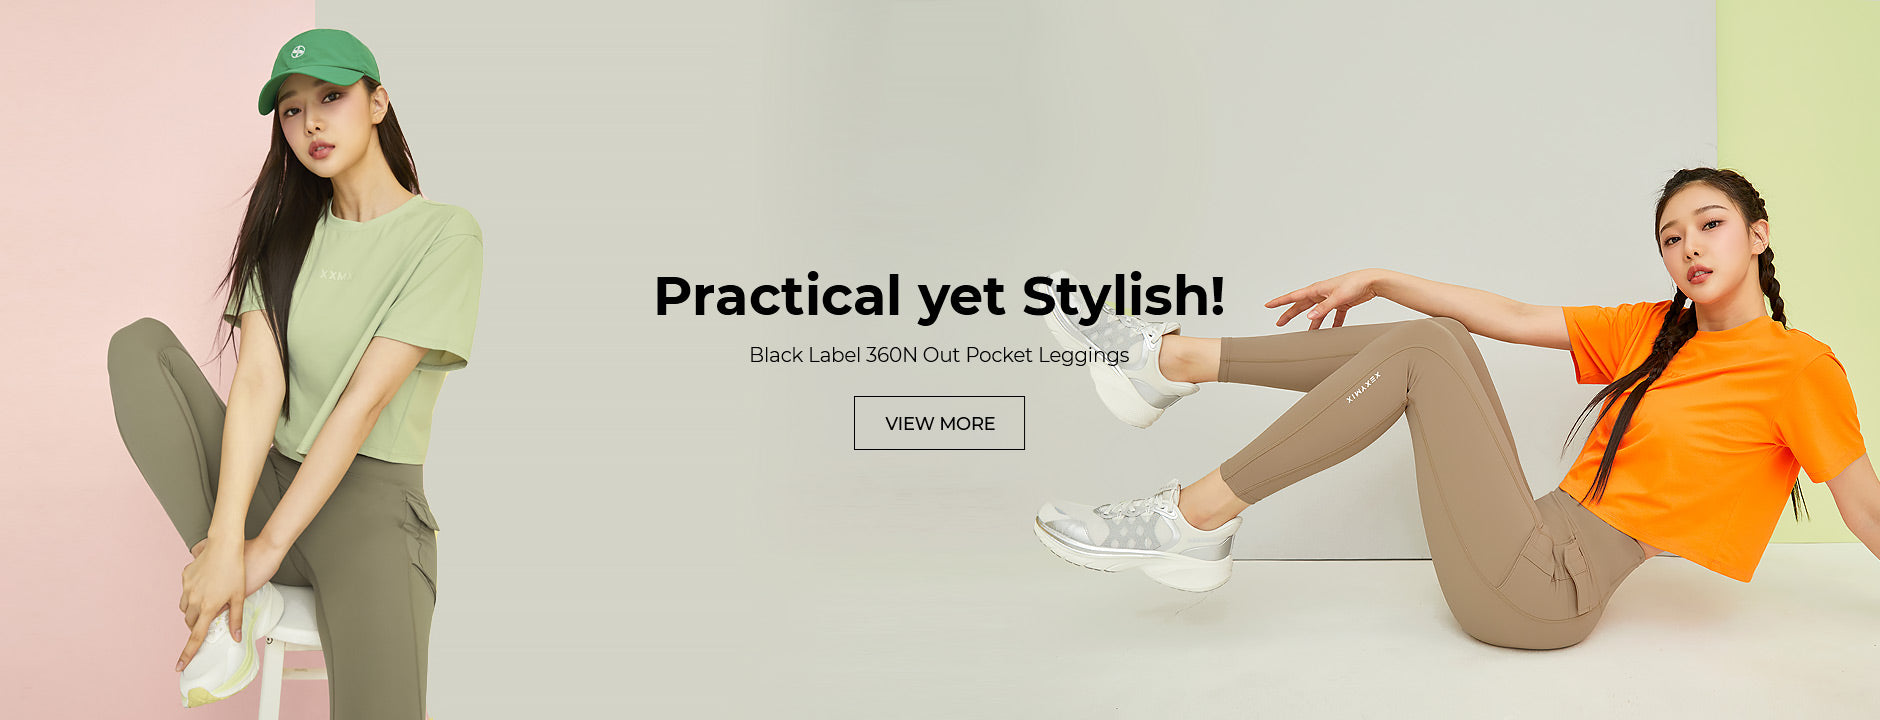 Shop Women's Activewear & Gym Wear Online For Asian Women: Anya Active